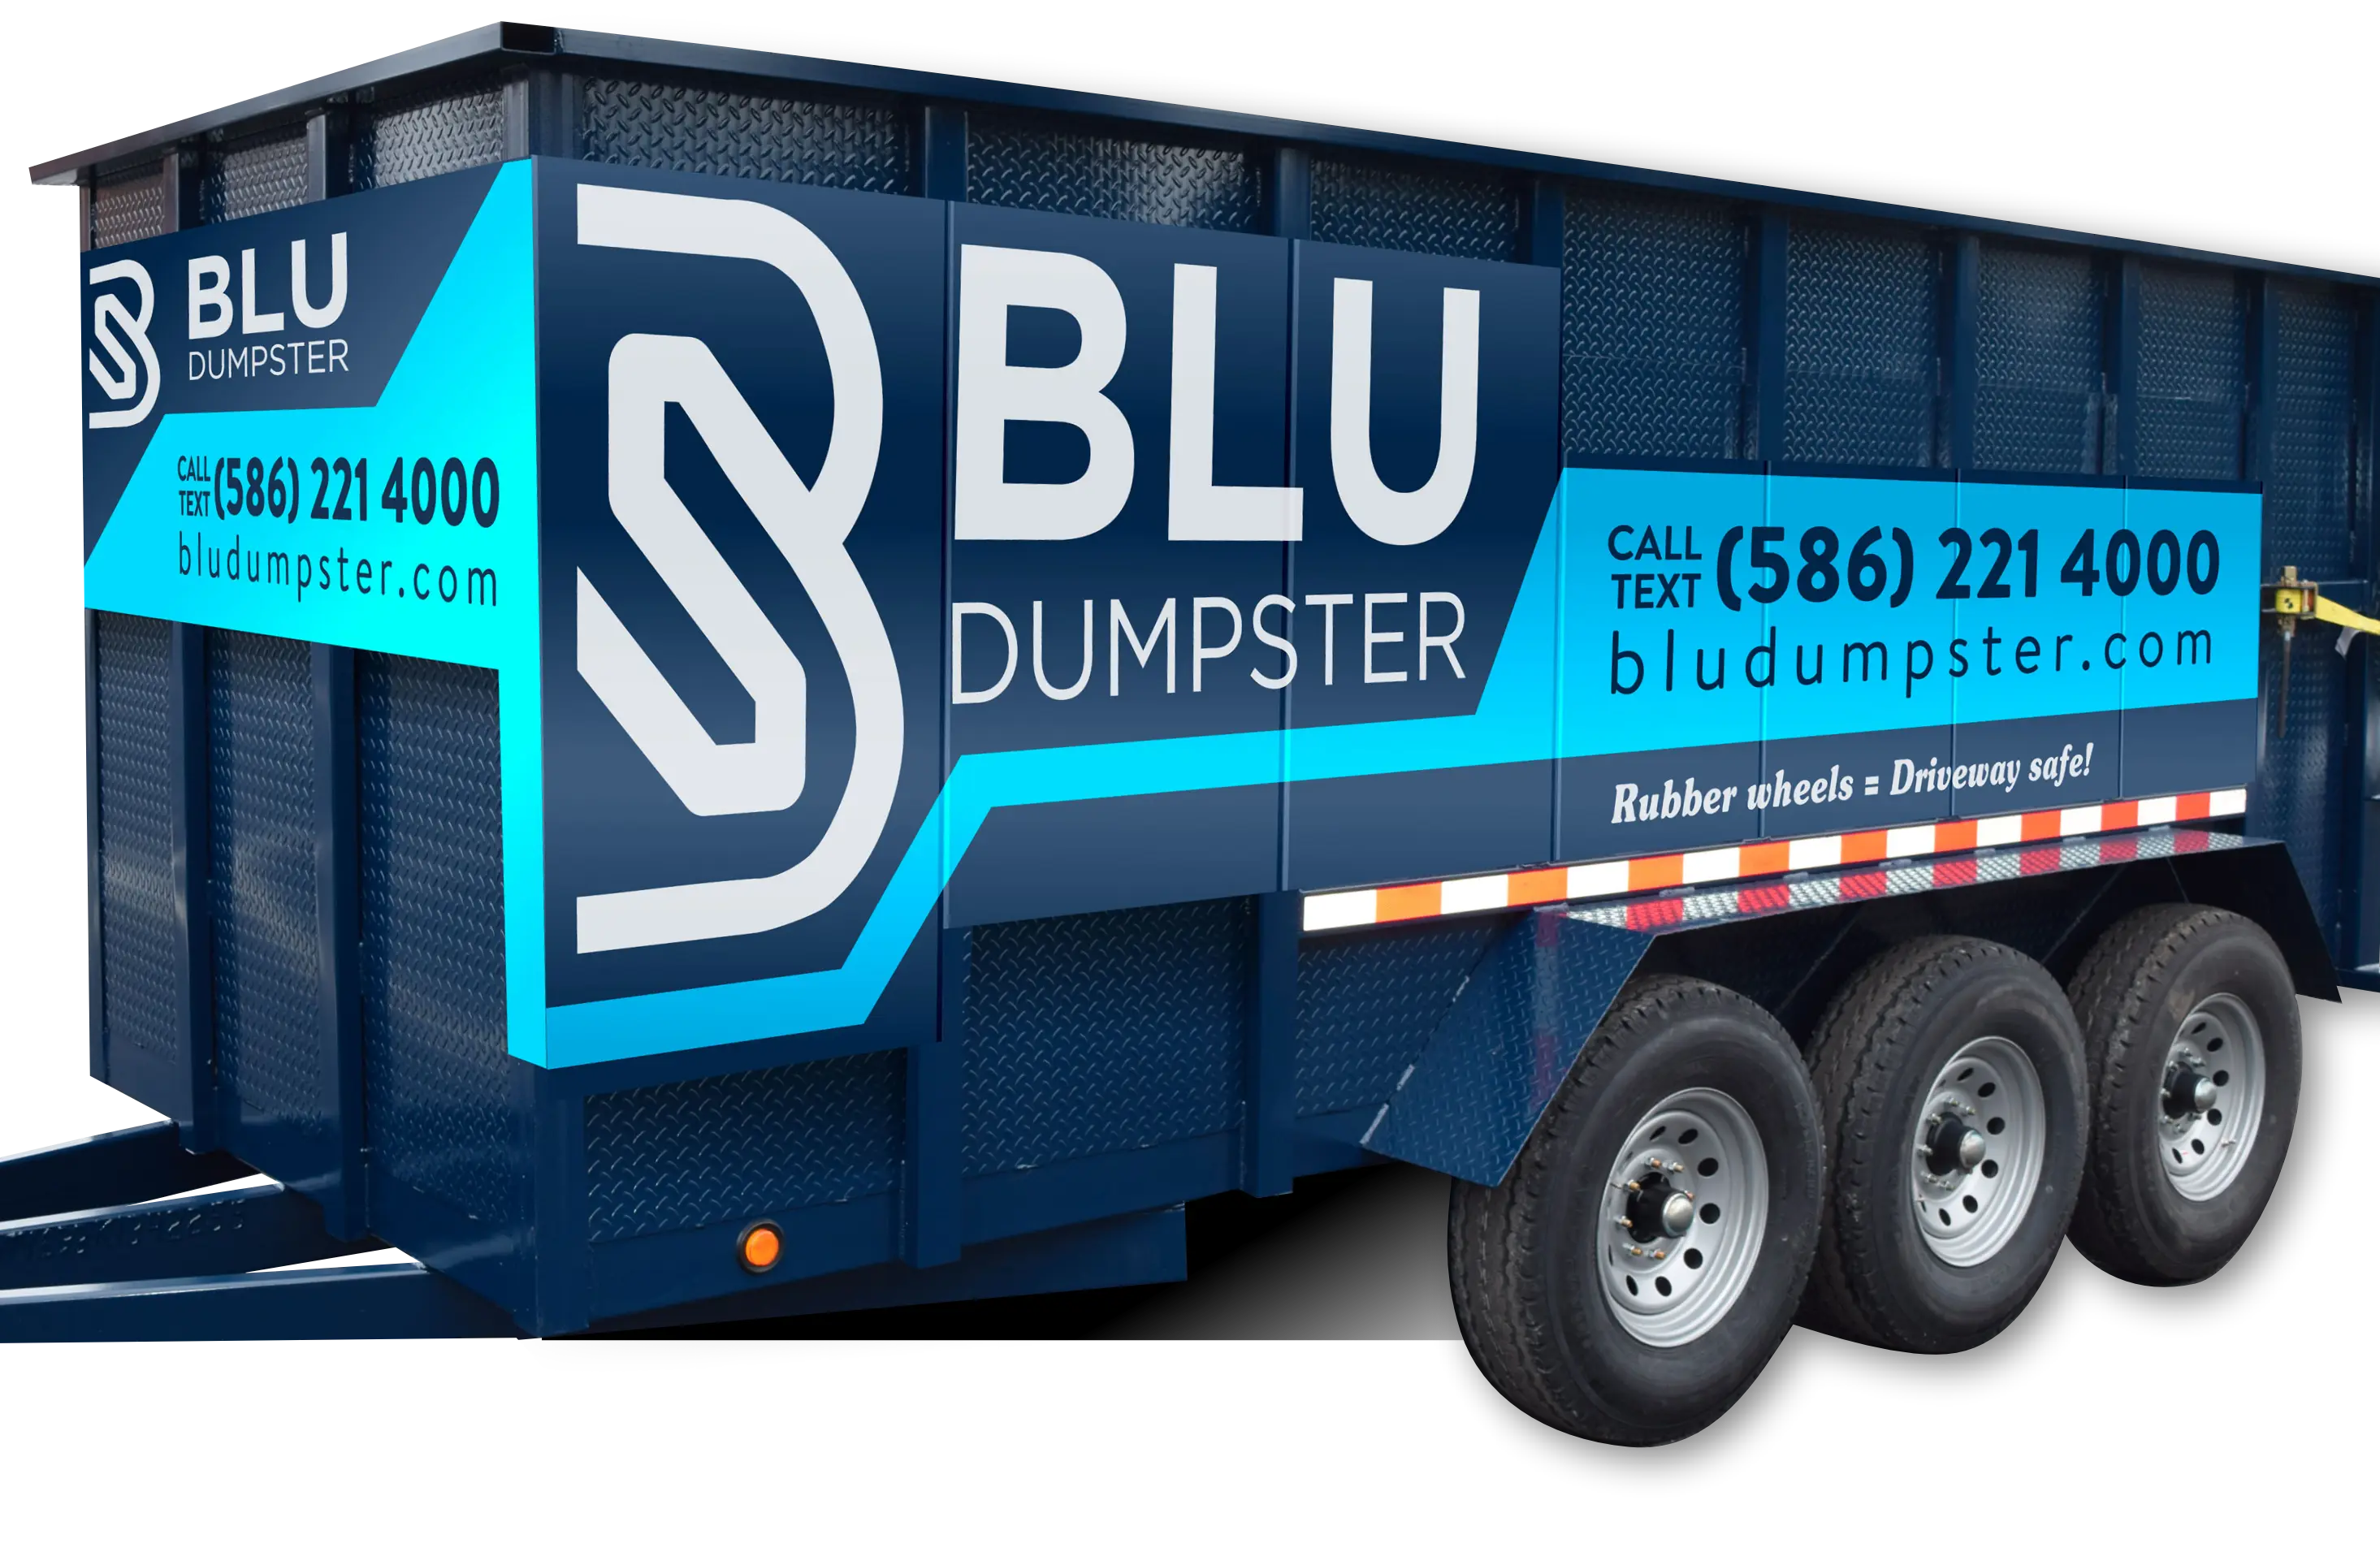 BLU Dumpster Rentals' Dumpster